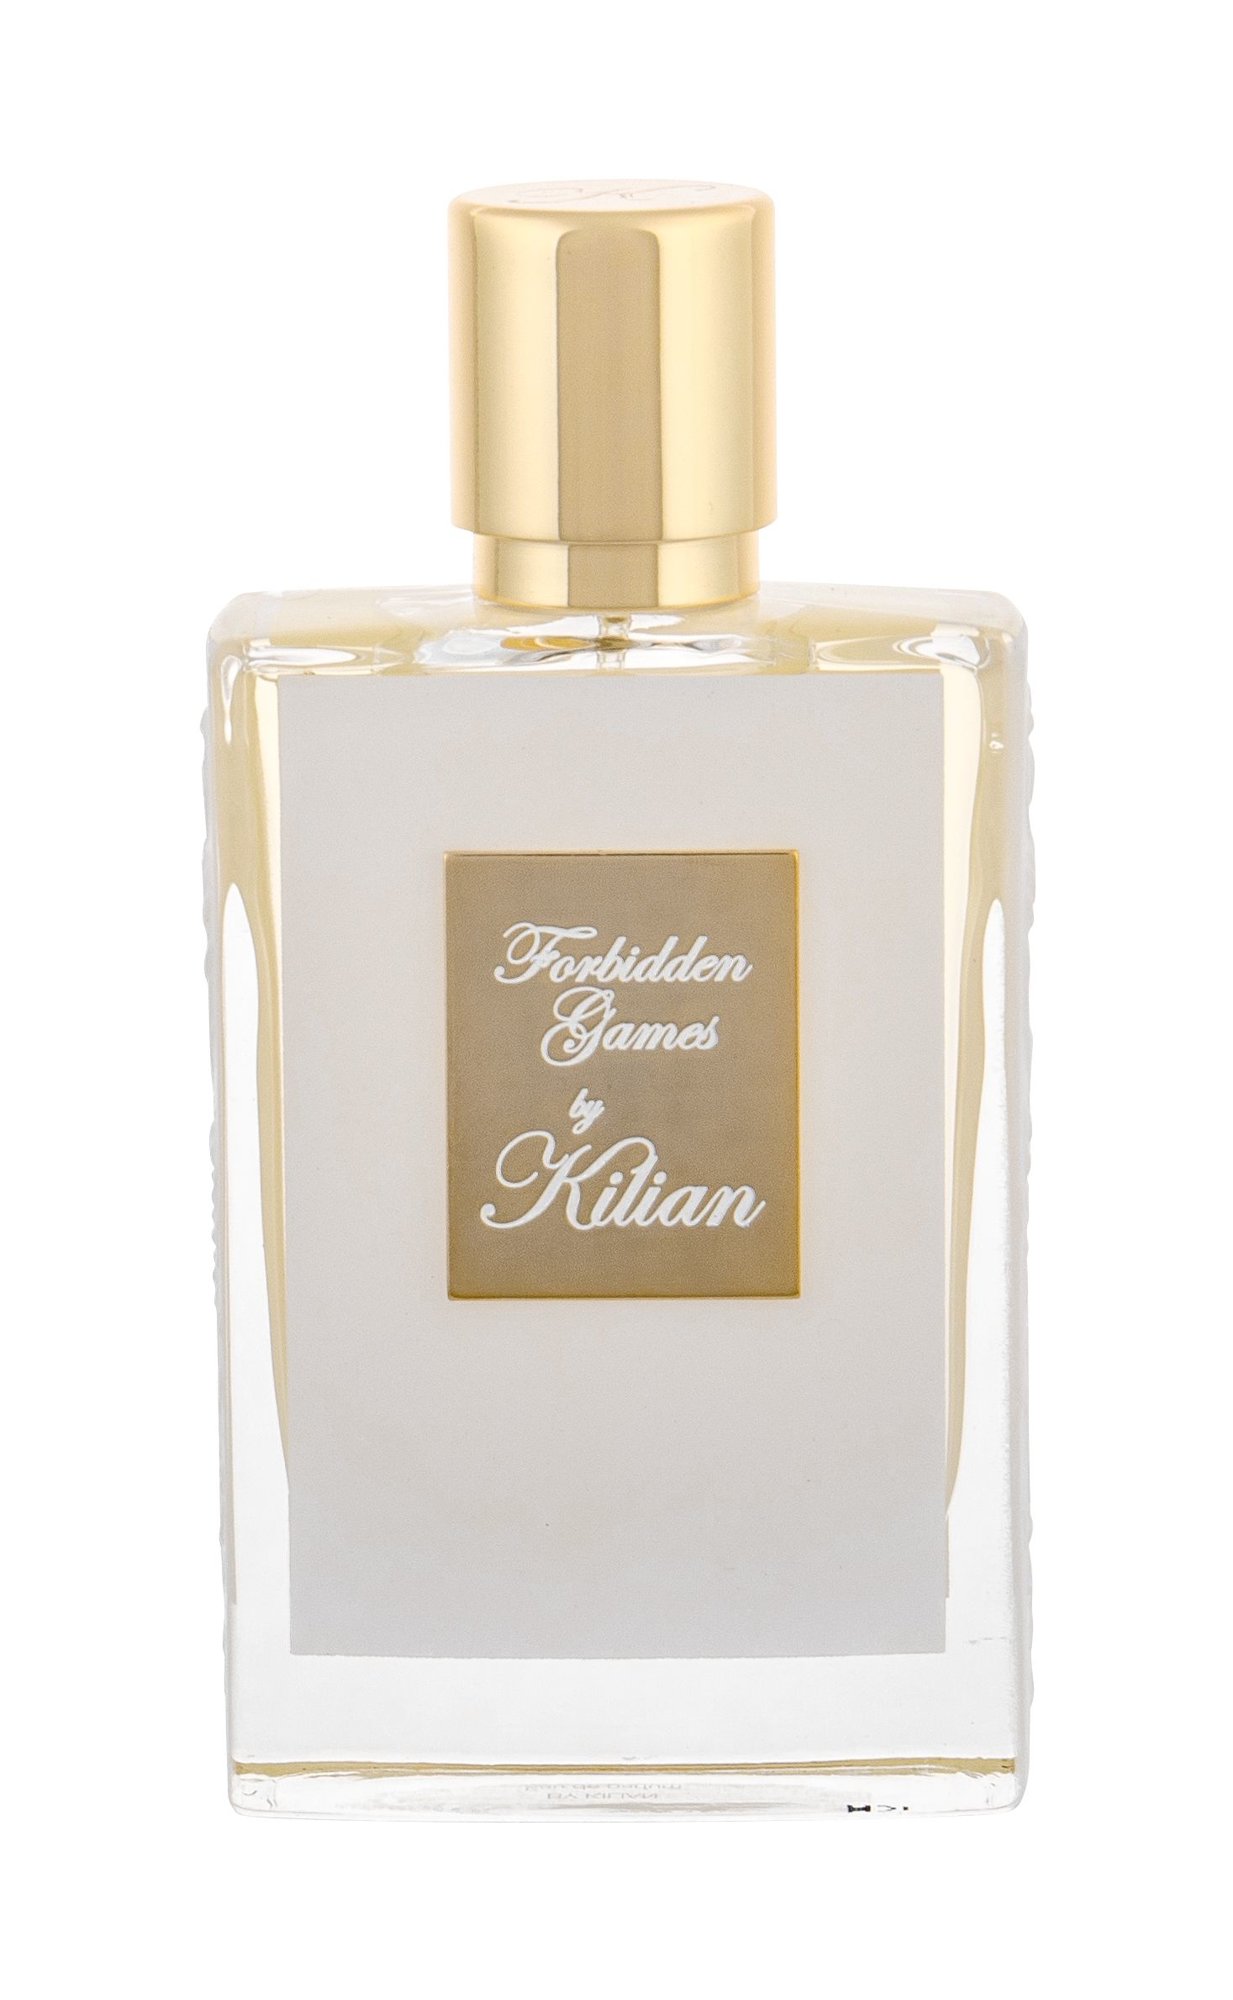 By Kilian Forbidden Games 50ml NIŠINIAI Edp 50 ml + Perfume Case Kvepalai Moterims EDP Rinkinys refillable